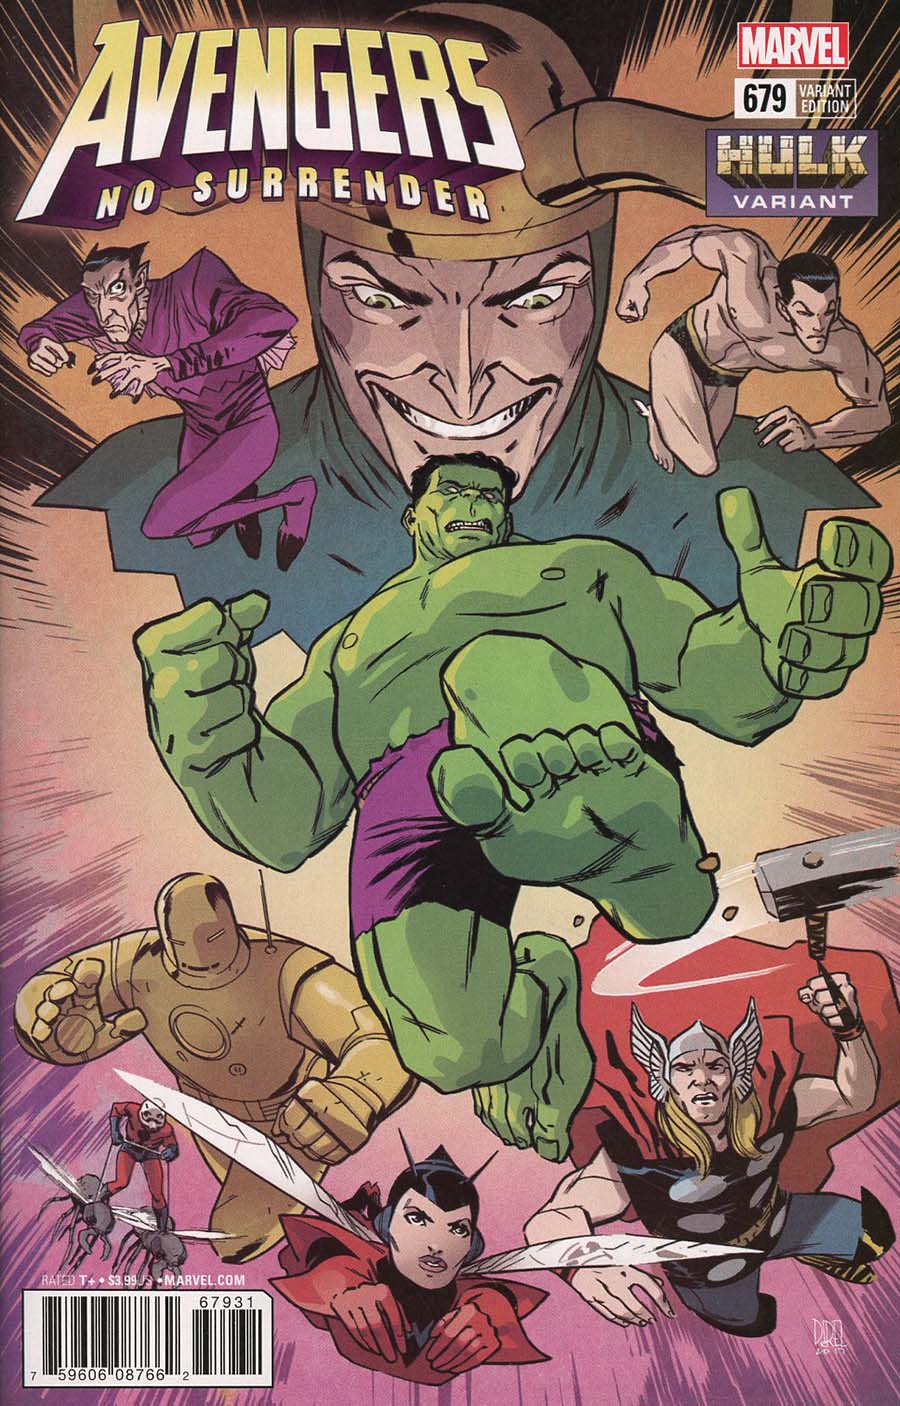 Avengers Vol 6 #679 Cover B Variant Ramon Perez Hulk Smash Cover (No Surrender Part 5)(Marvel Legacy Tie-In)